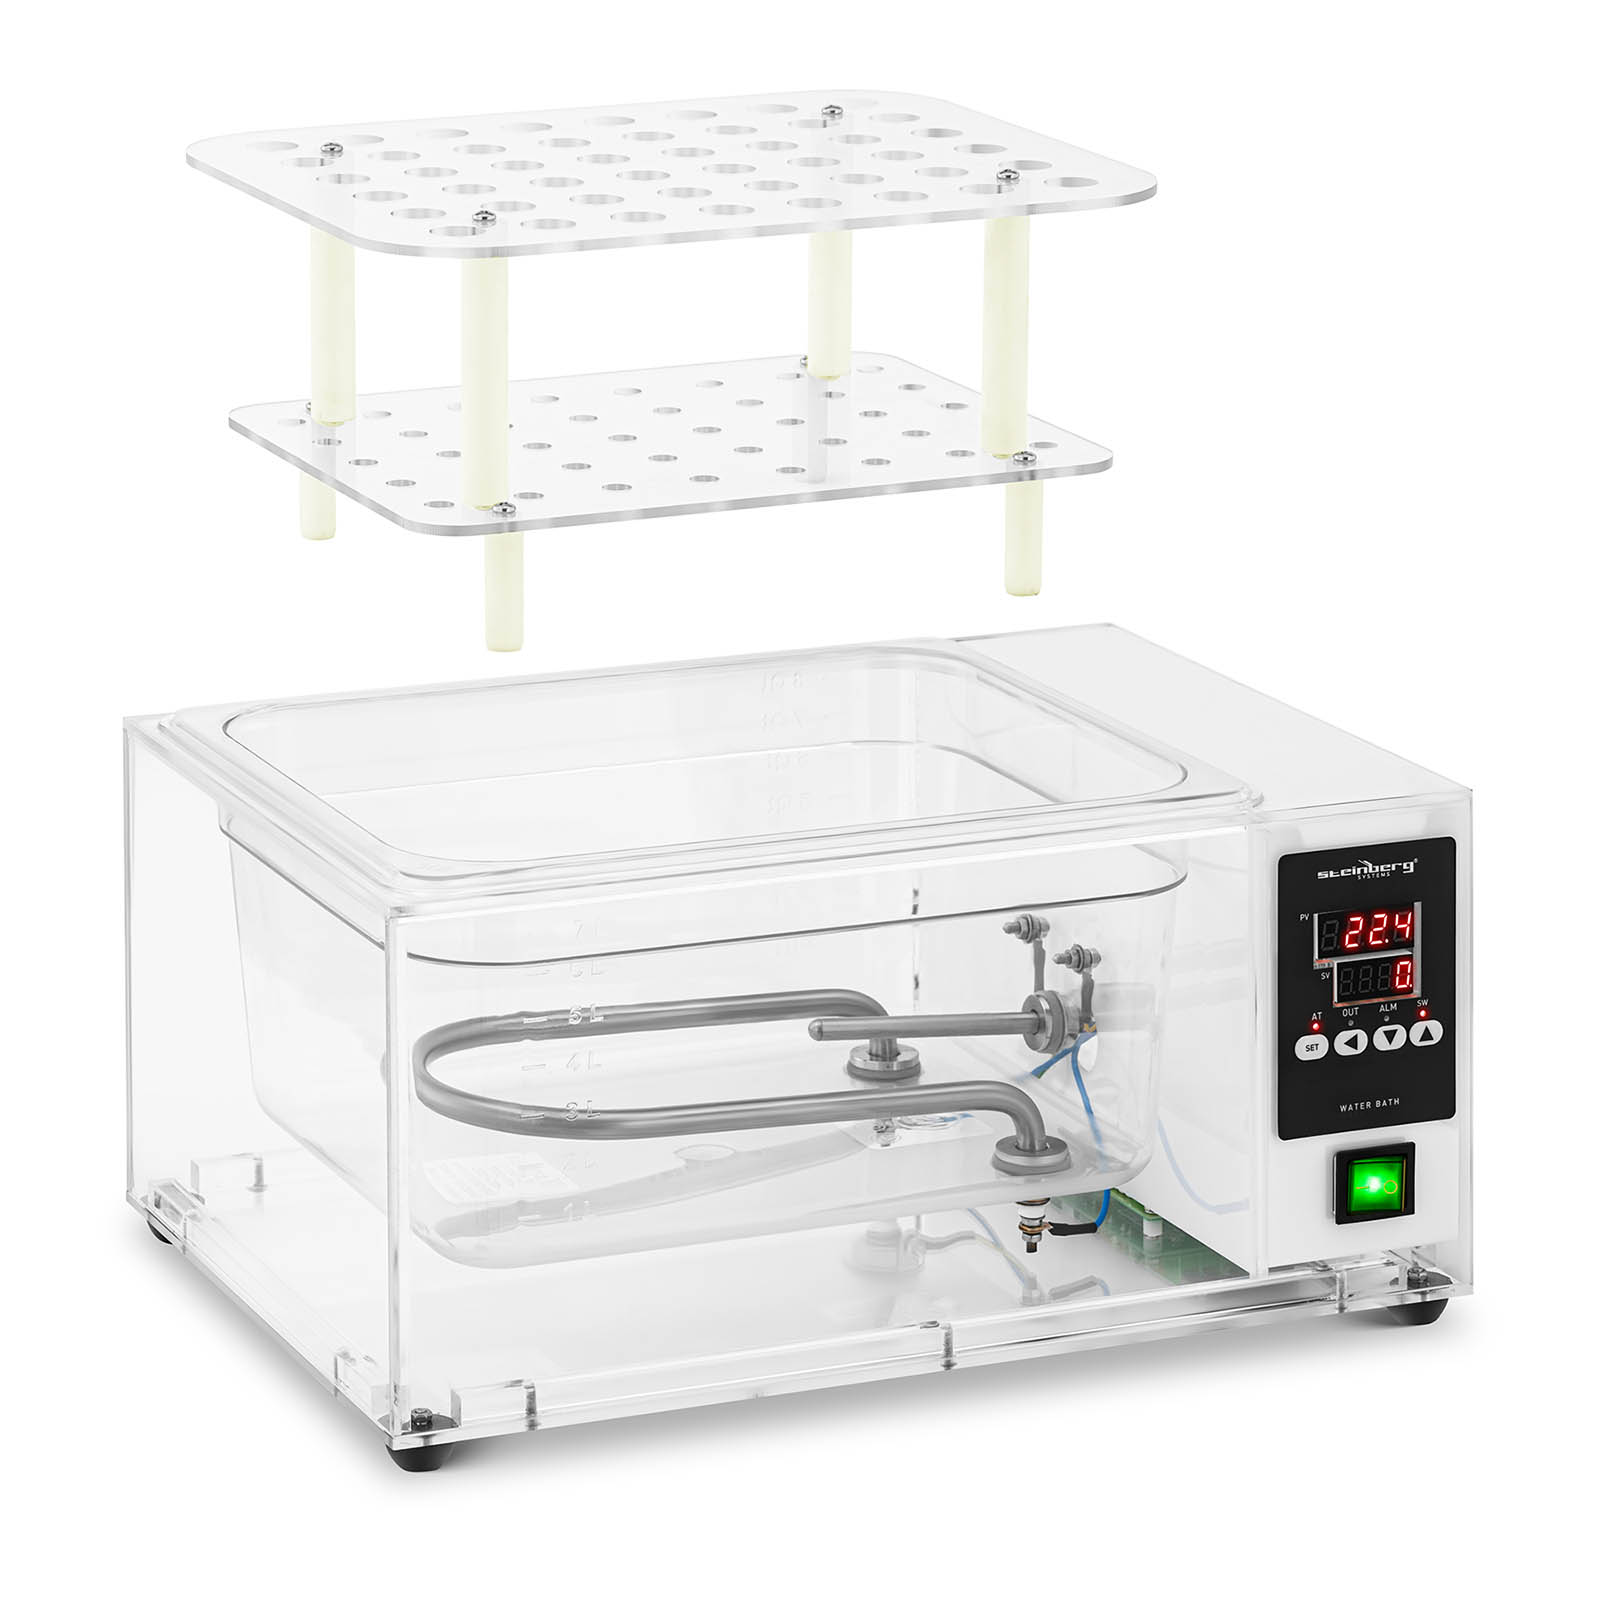 Baño de agua para laboratorio - digital - 9 L - transparente - 5-100 °C - 280 x 220 x 150 mm